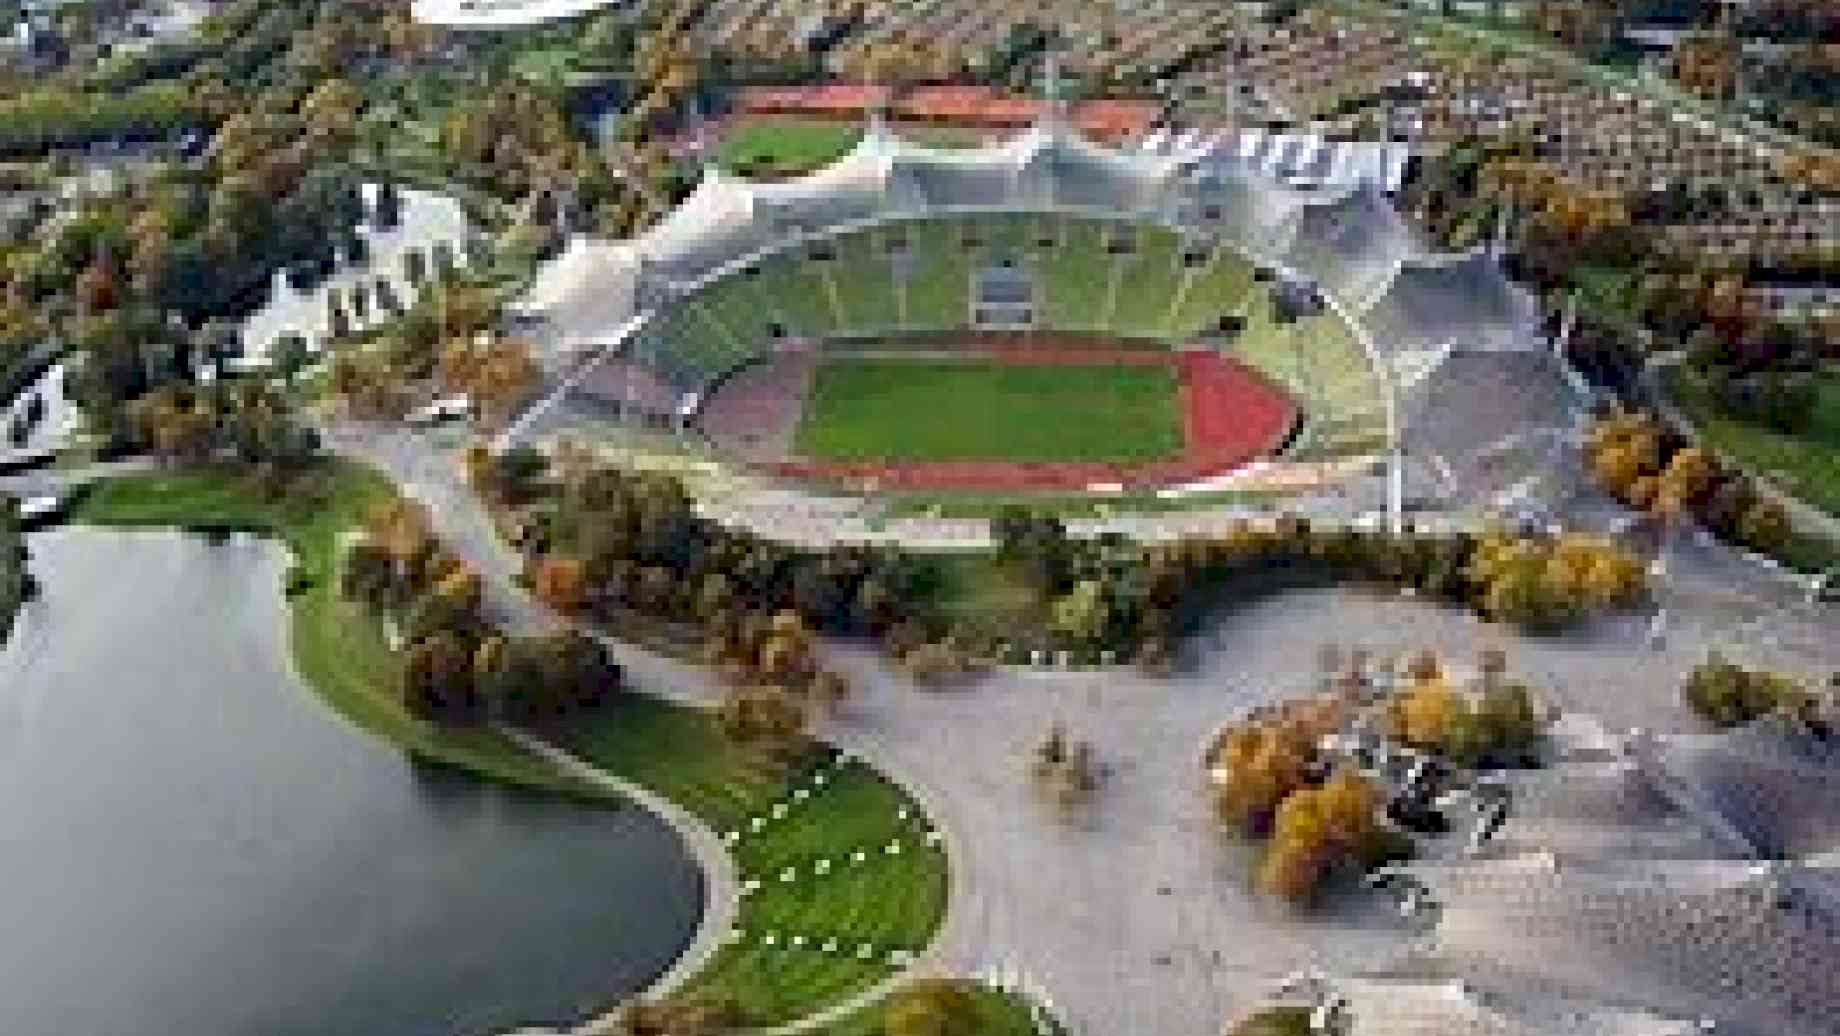 Munich Olympic Stadium and grounds